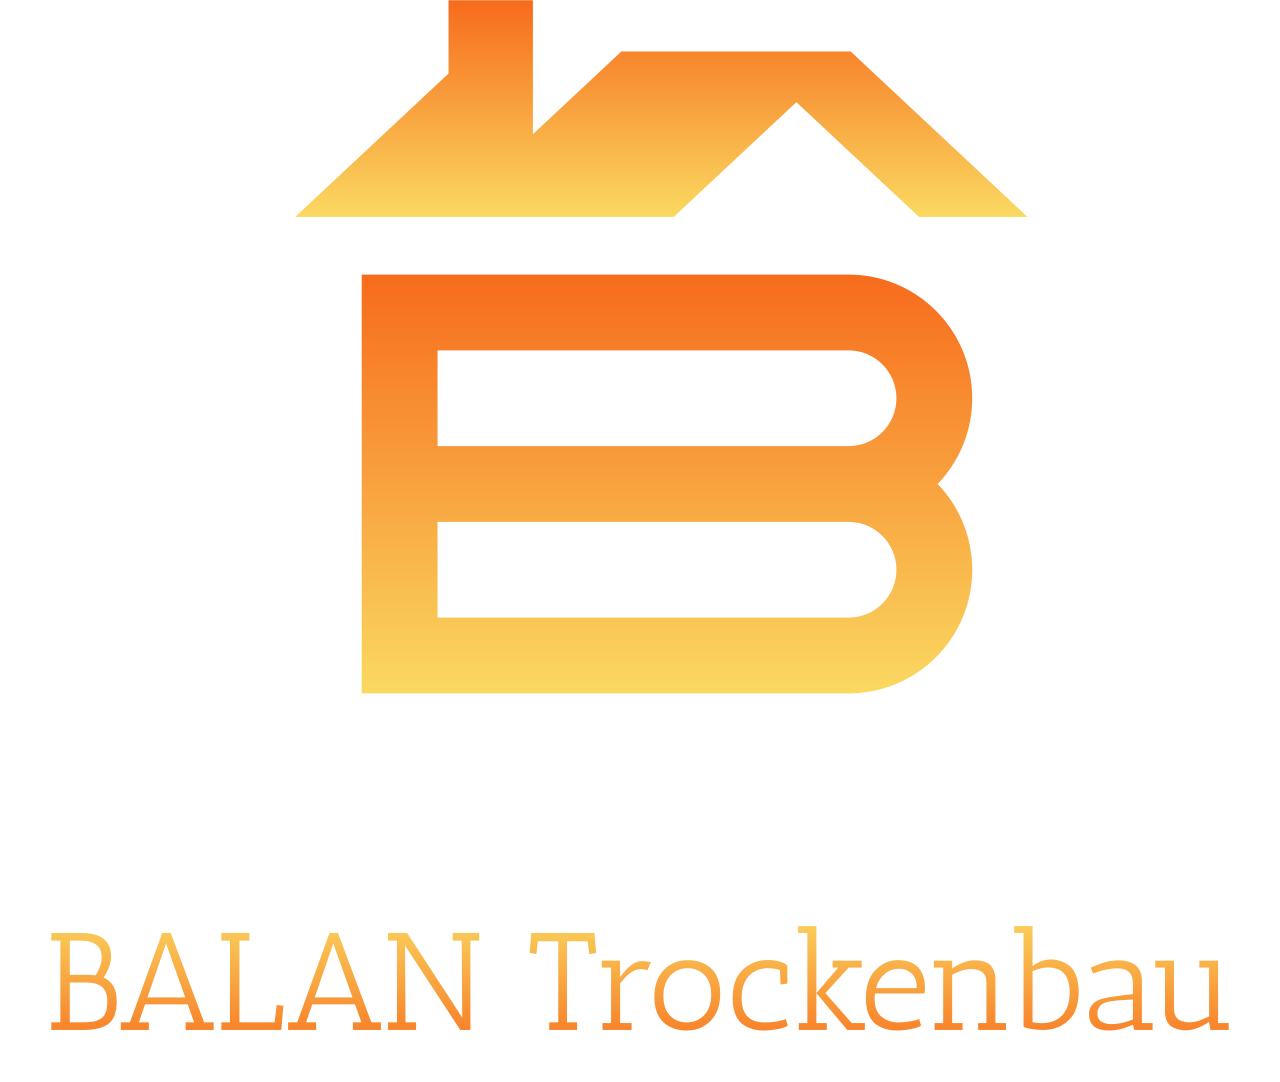 BALAN Trockenbau's logo